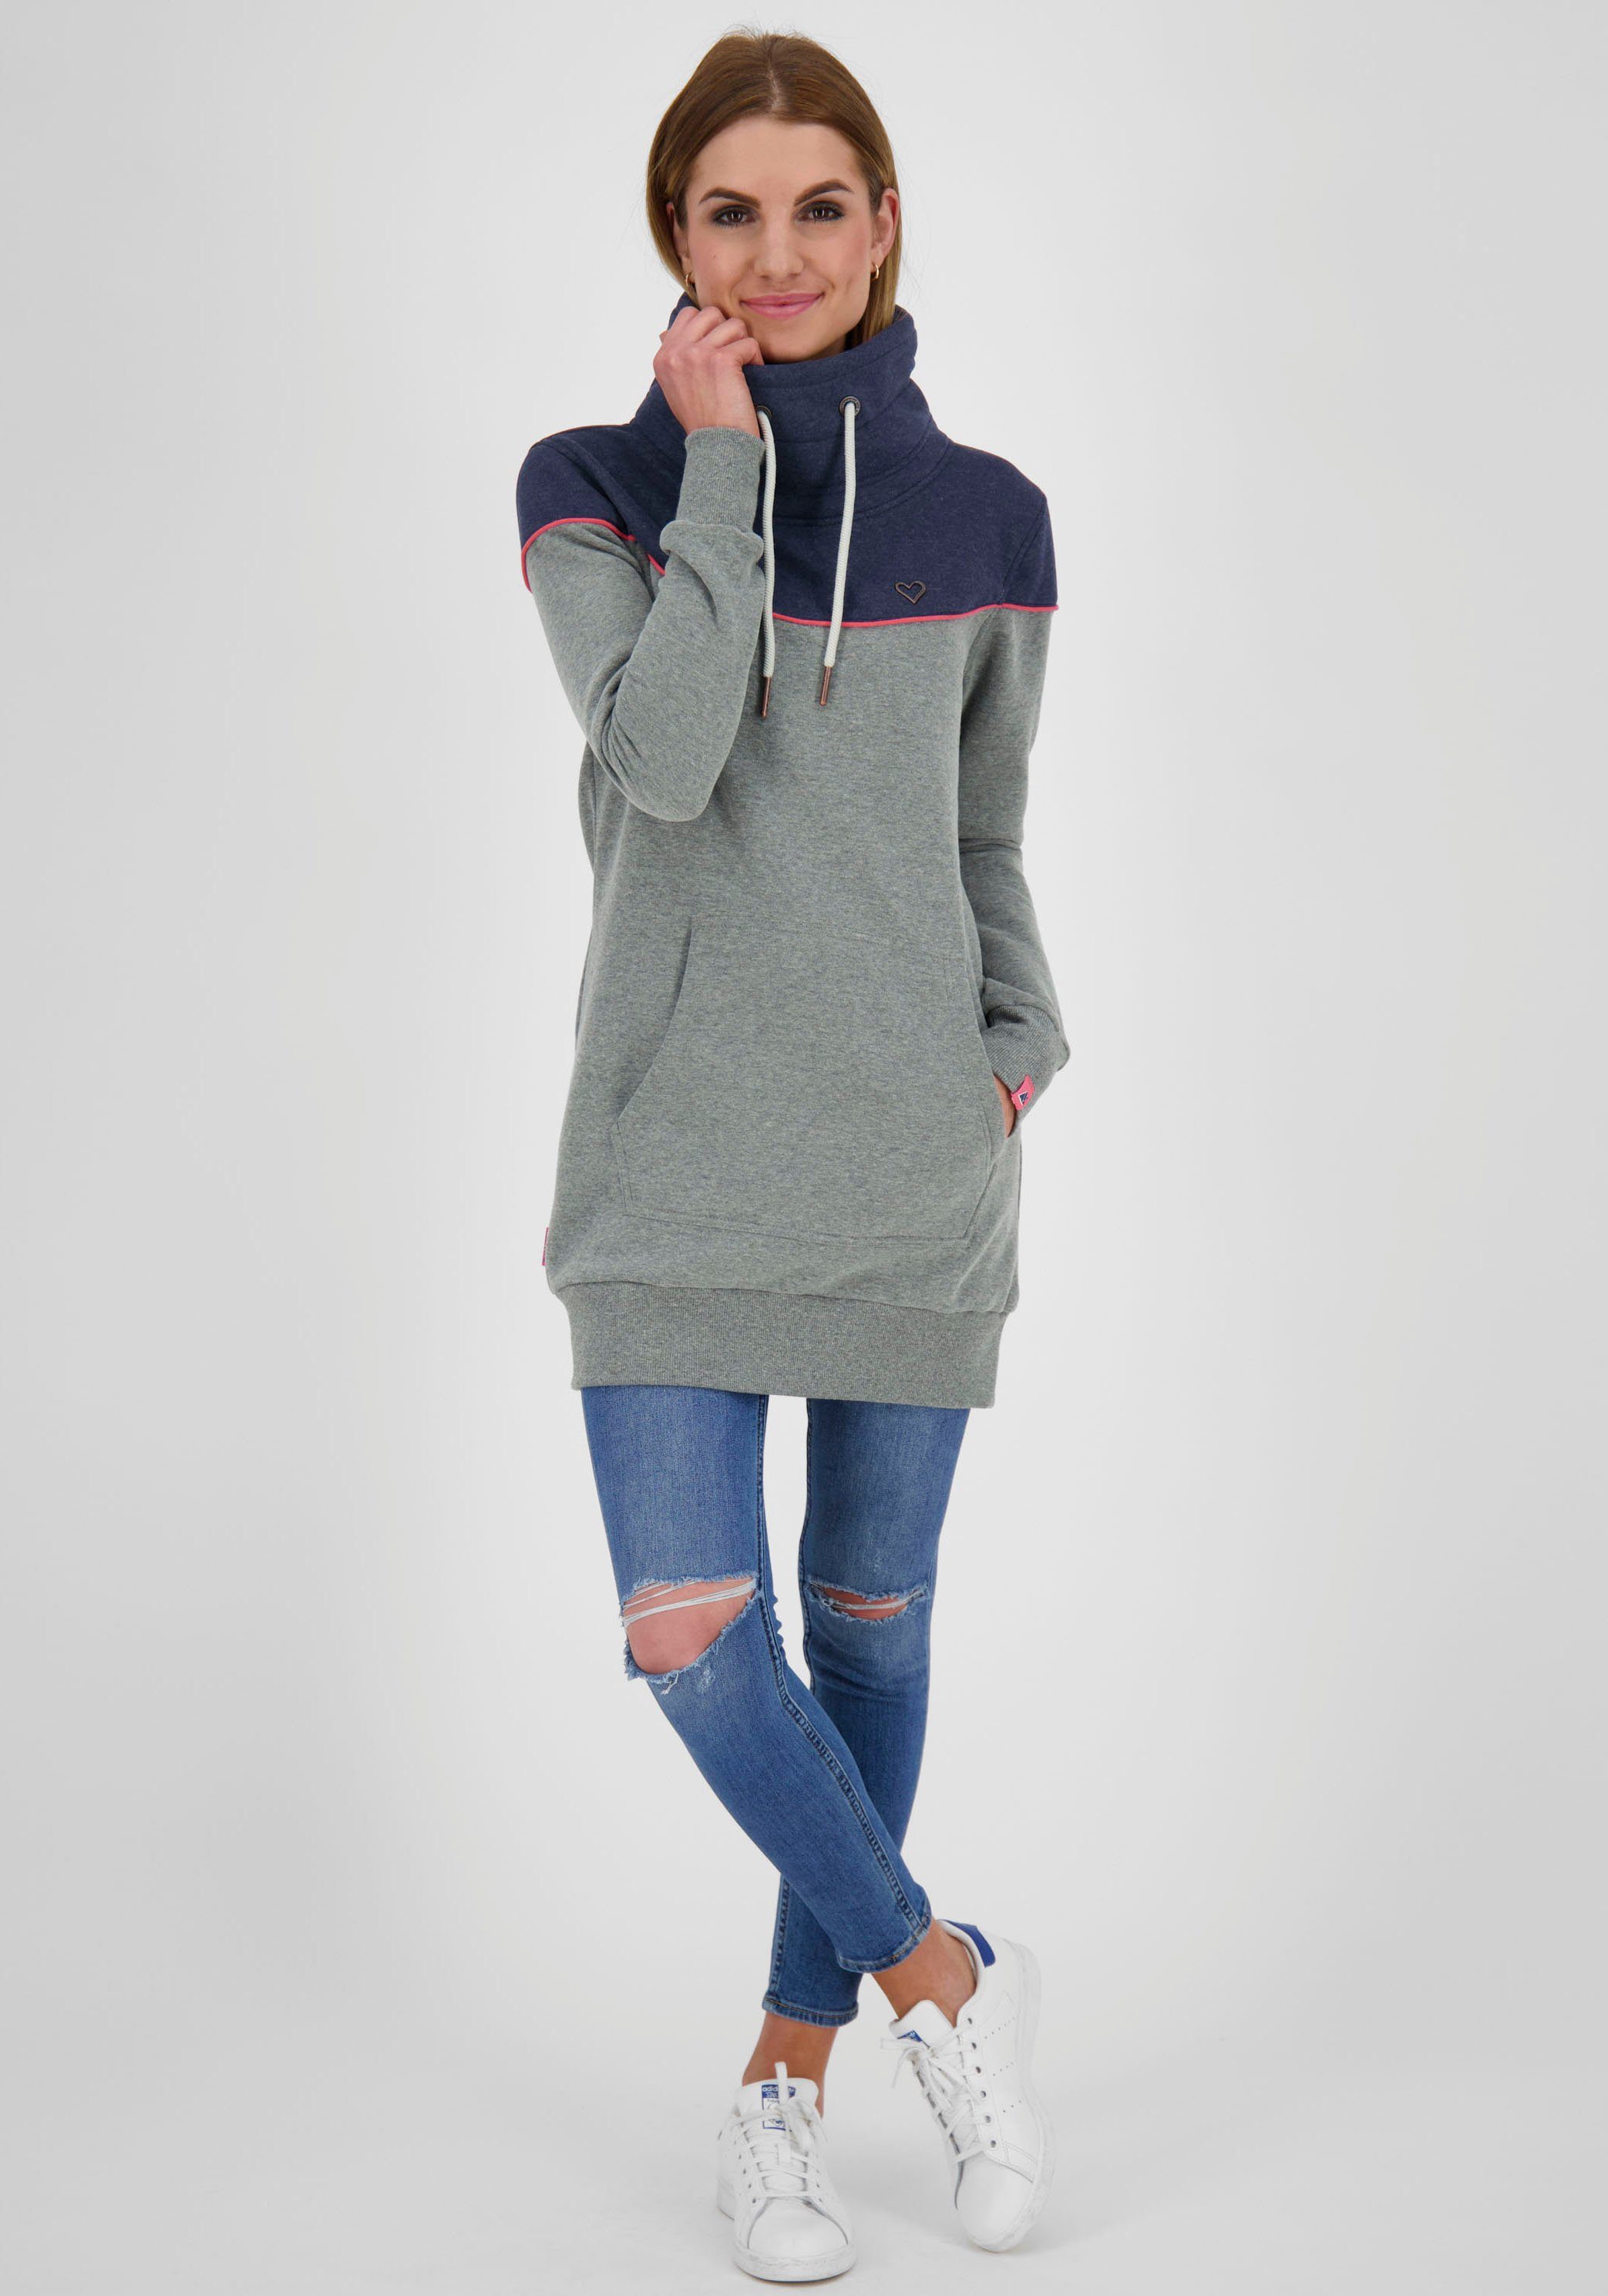 Jerseykleid Sweater & in mit langer ValaAK Form Kickin Alife sportiver Kontrastdetails